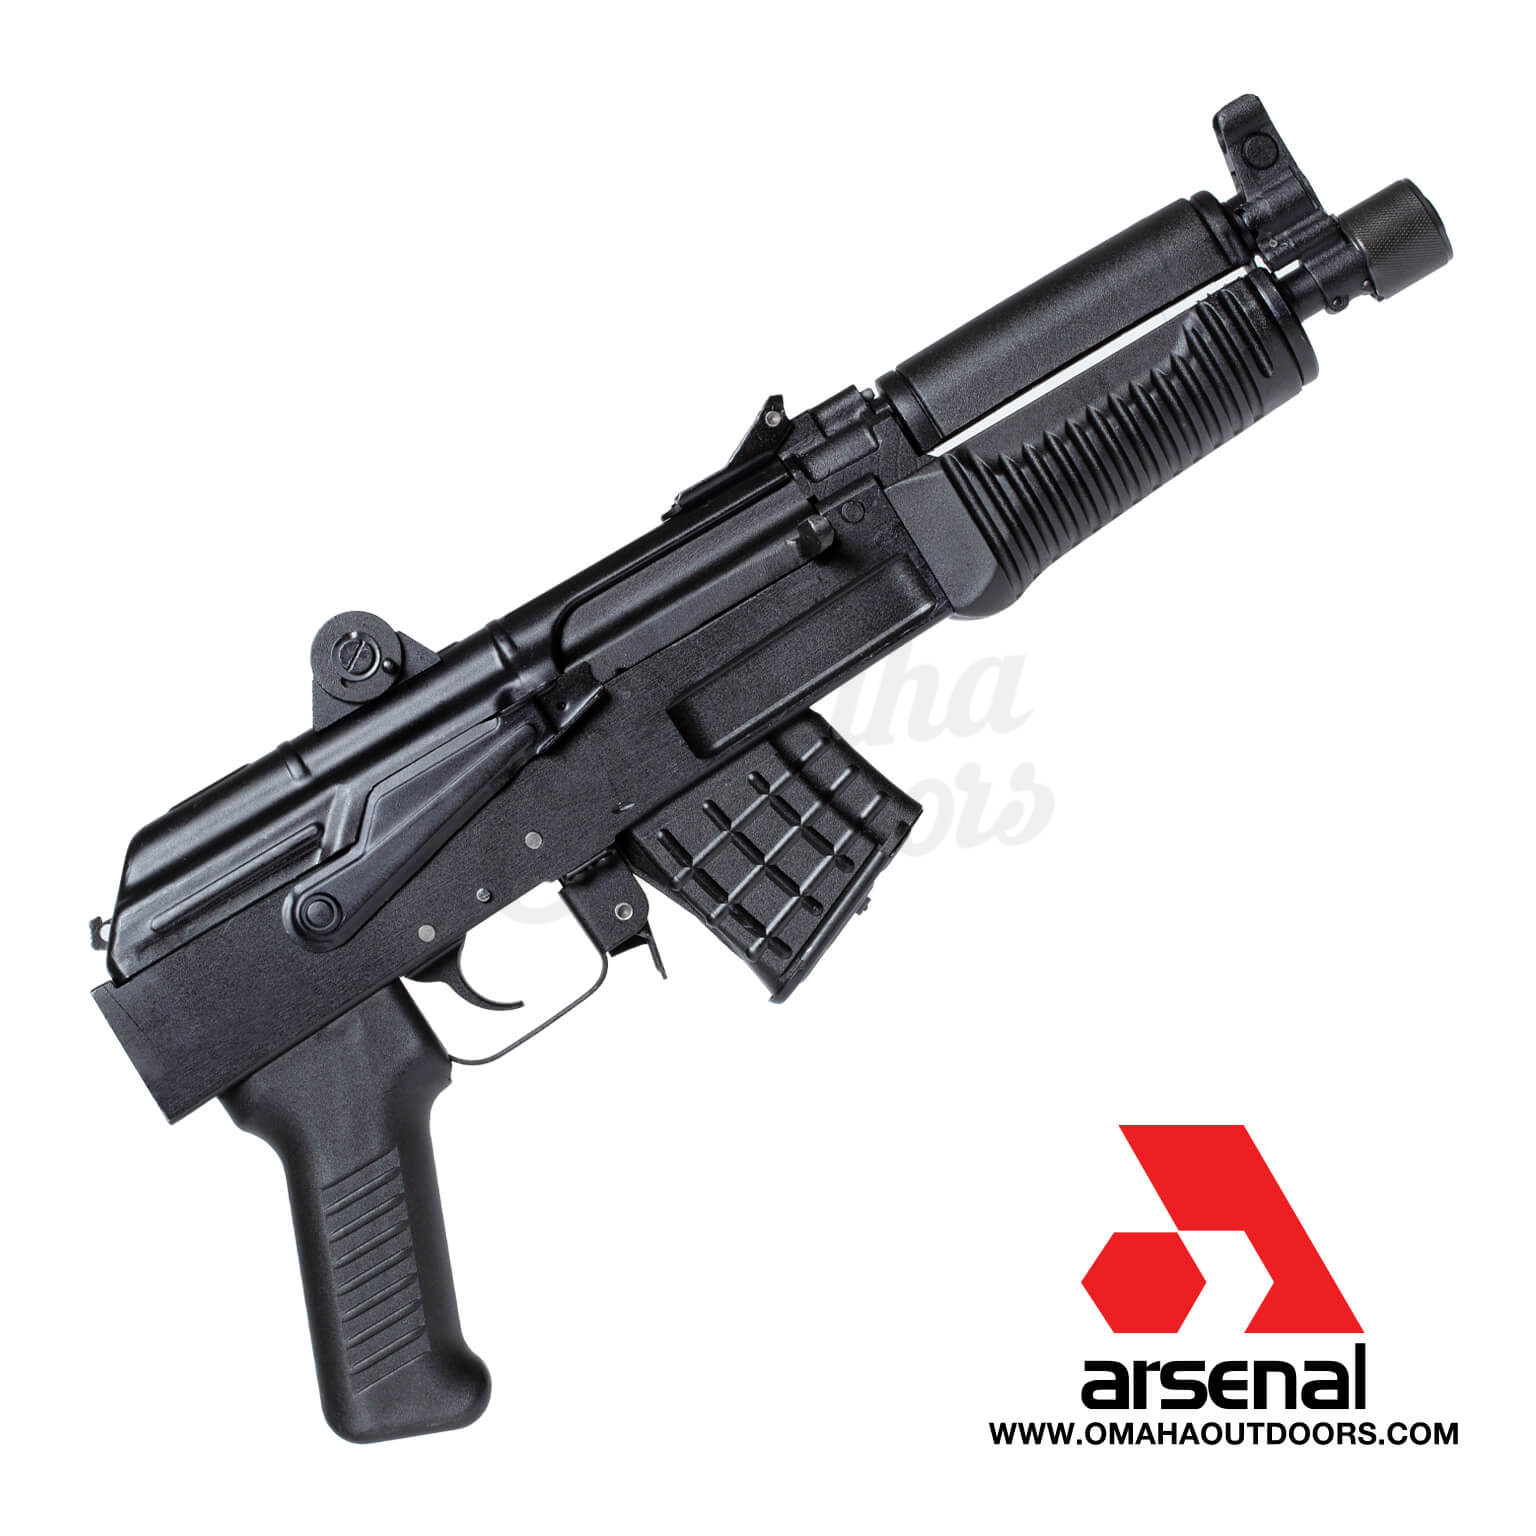 Arsenal Inc Ars Sam7k-34 7.62x39 Ak Pistol - For Sale - New 